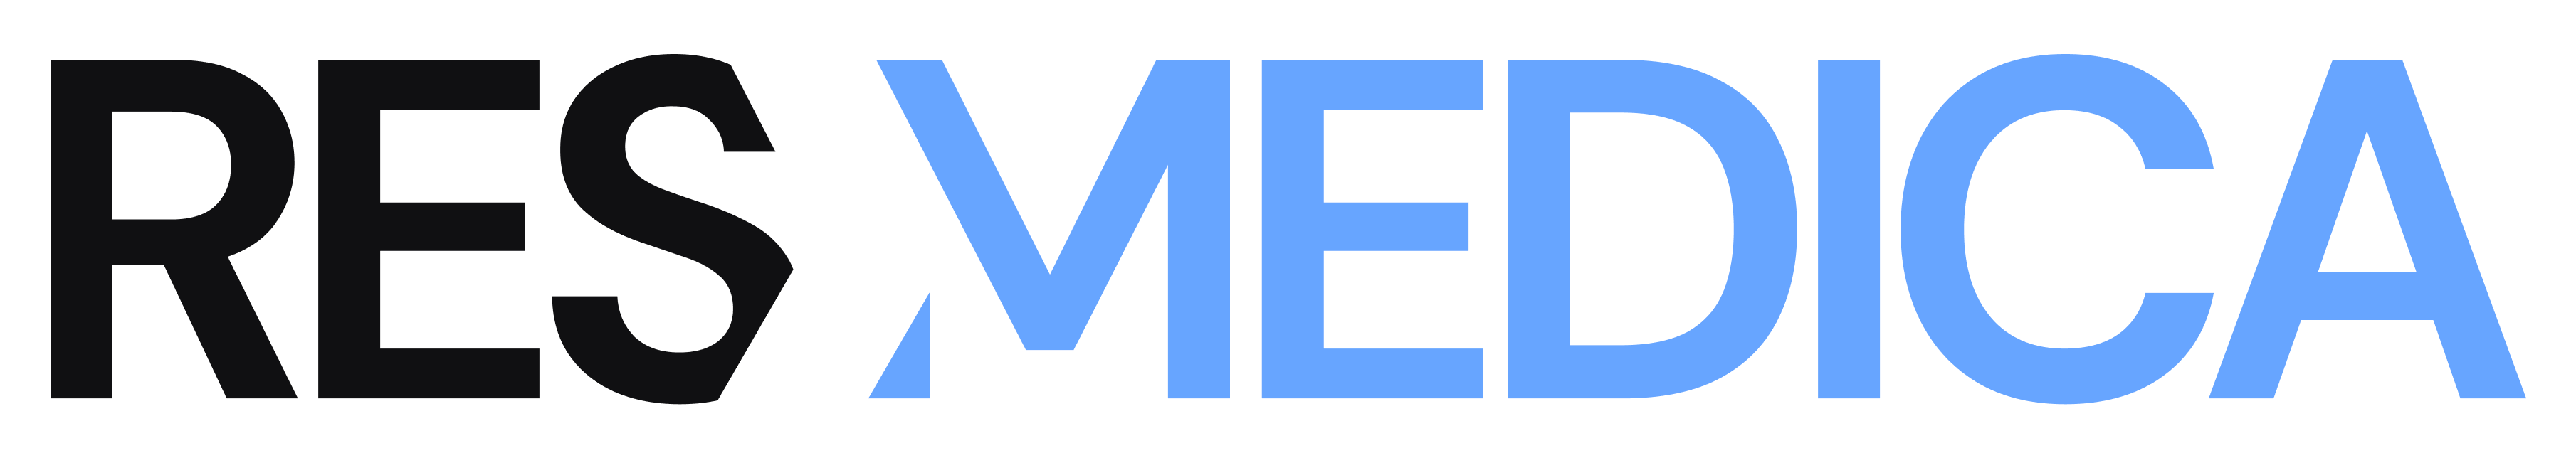 logo-dark-blue